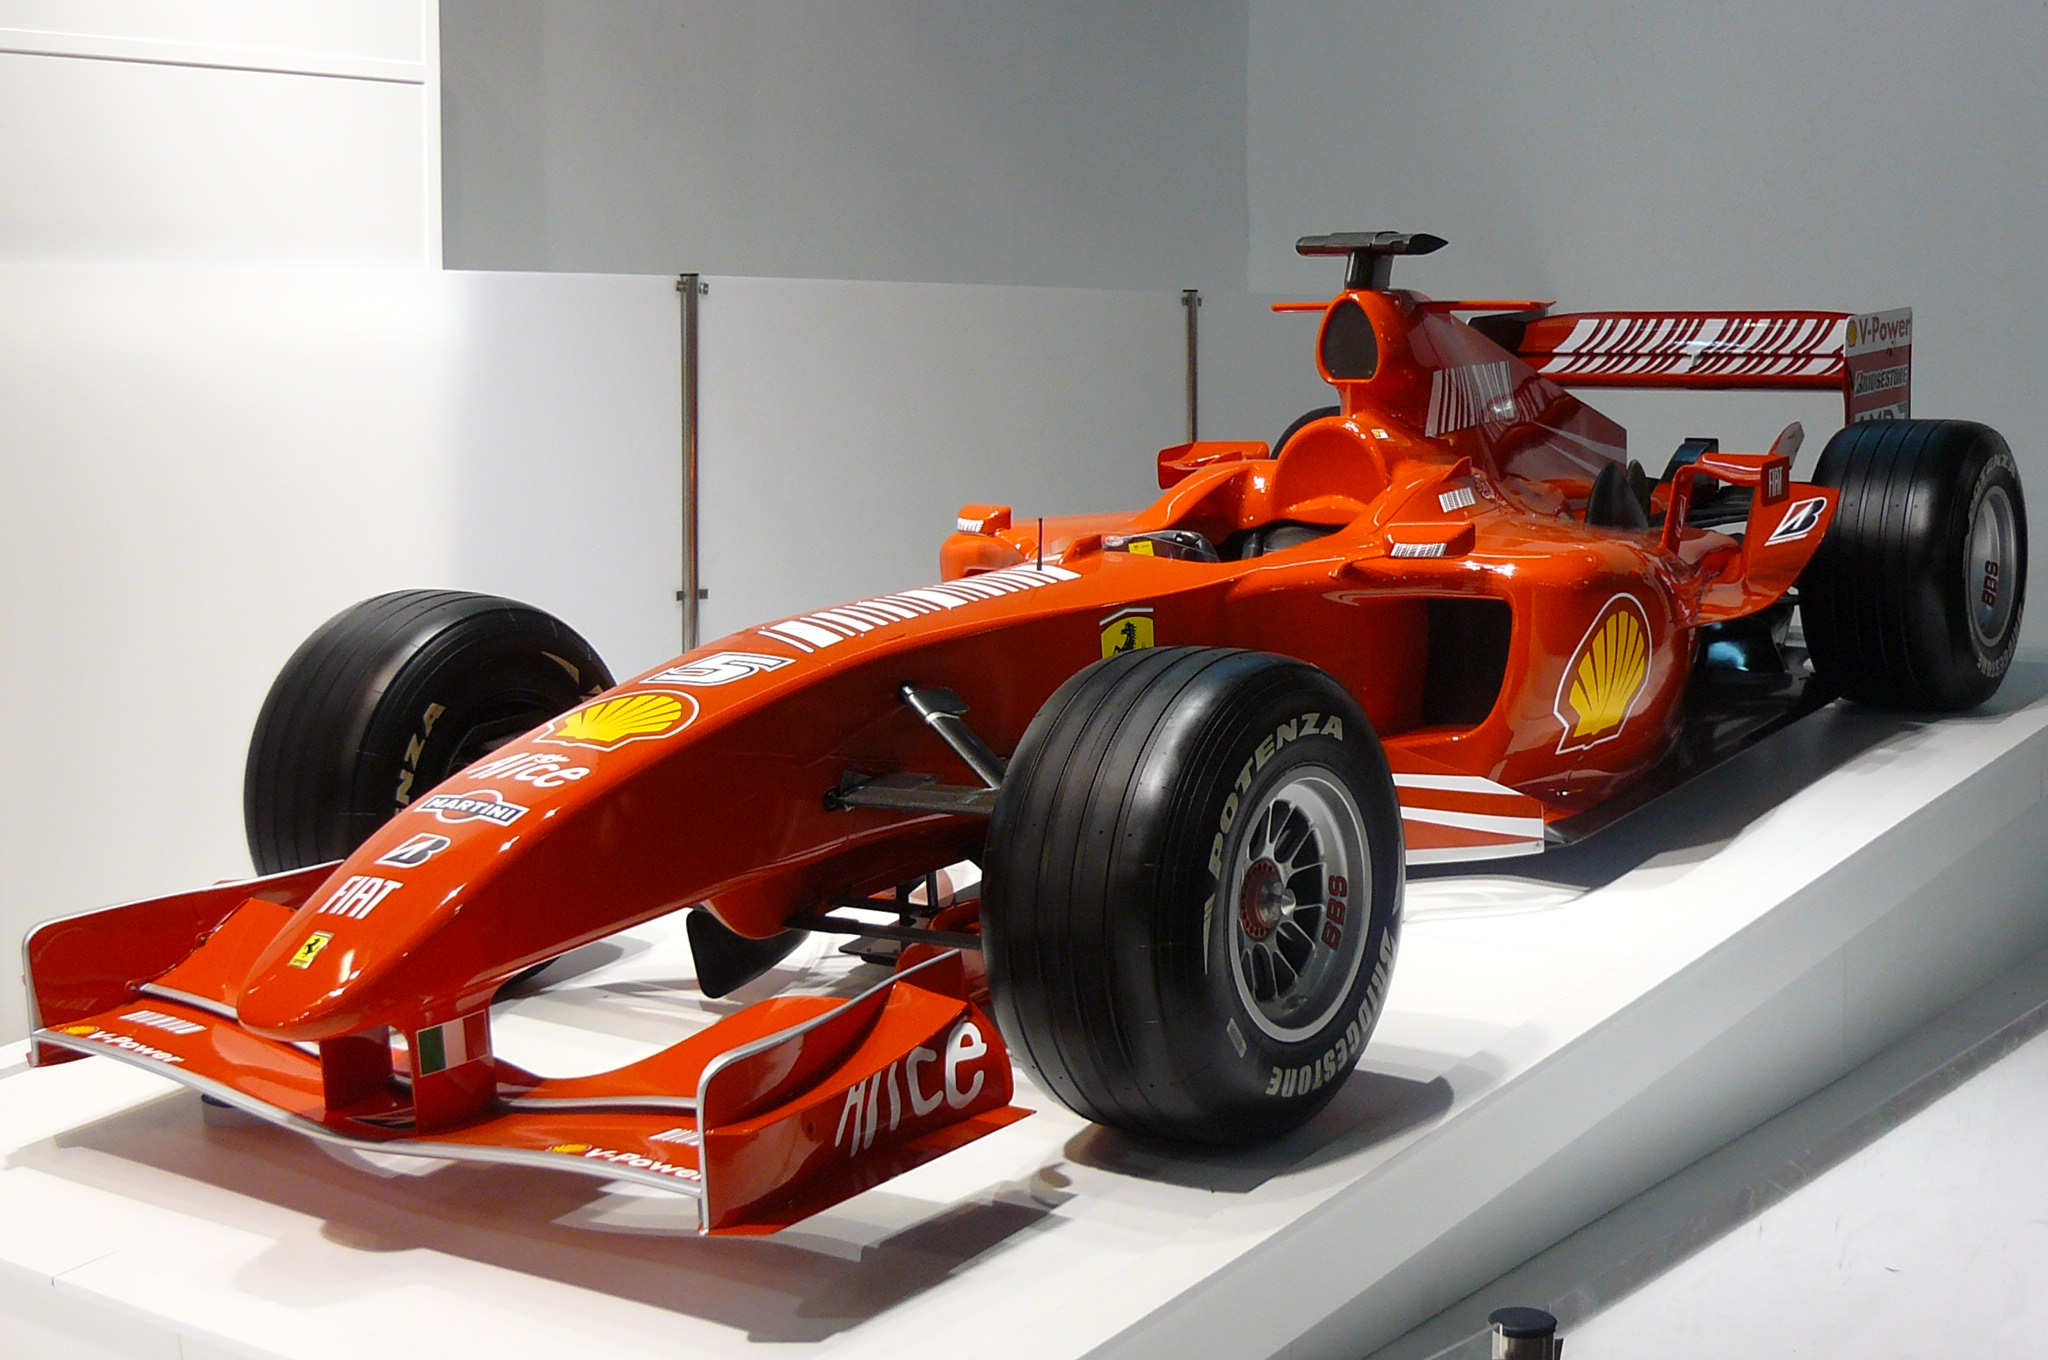 File:070616 Ferrari F1 2007 01.JPG - Wikimedia Commons